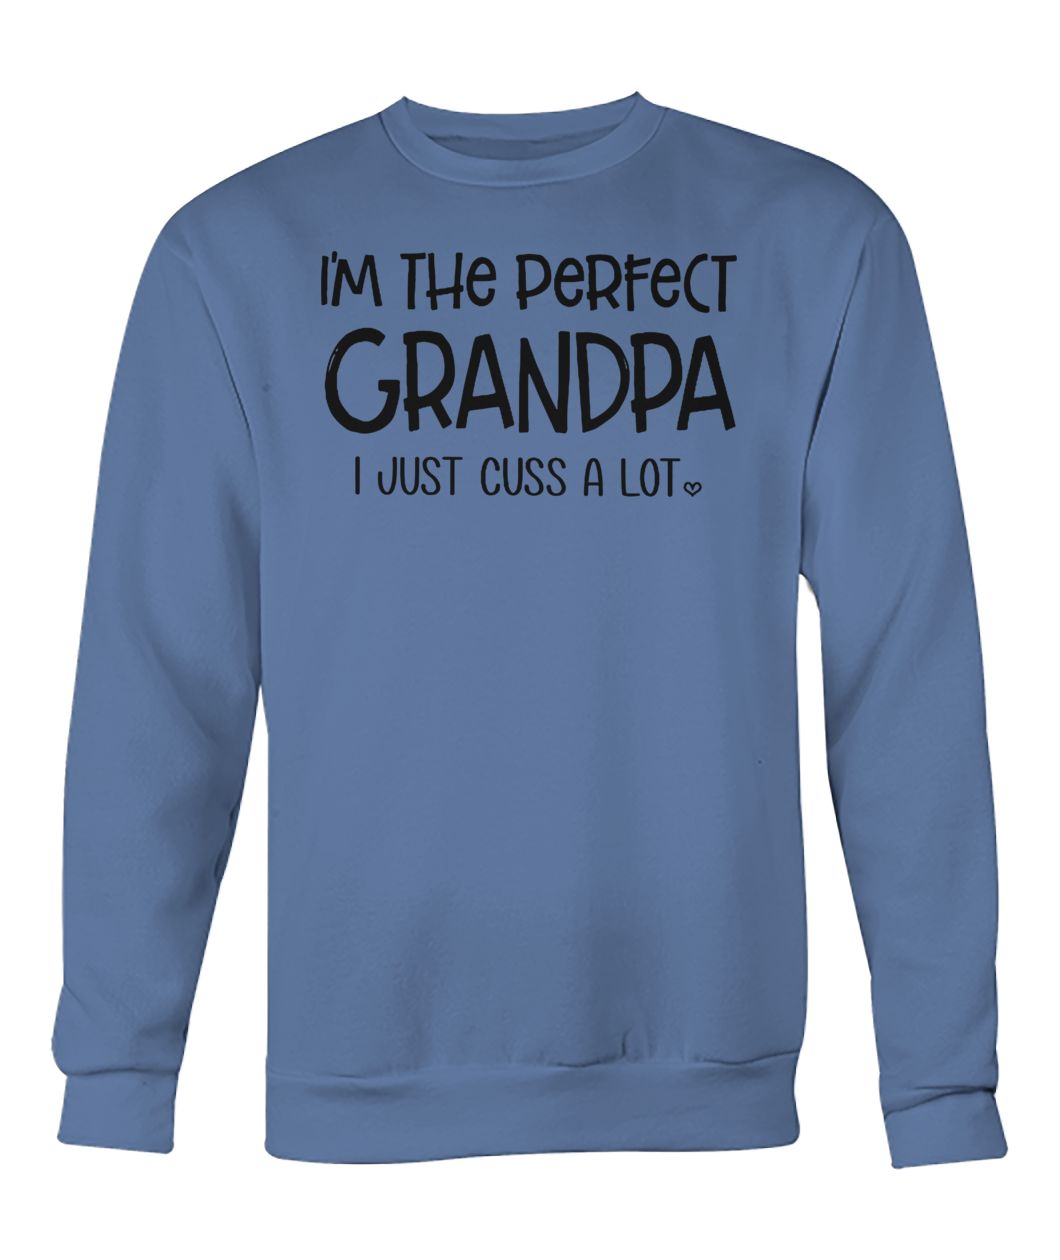 I'm the perfect grandpa I just cuss a lot crew neck sweatshirt